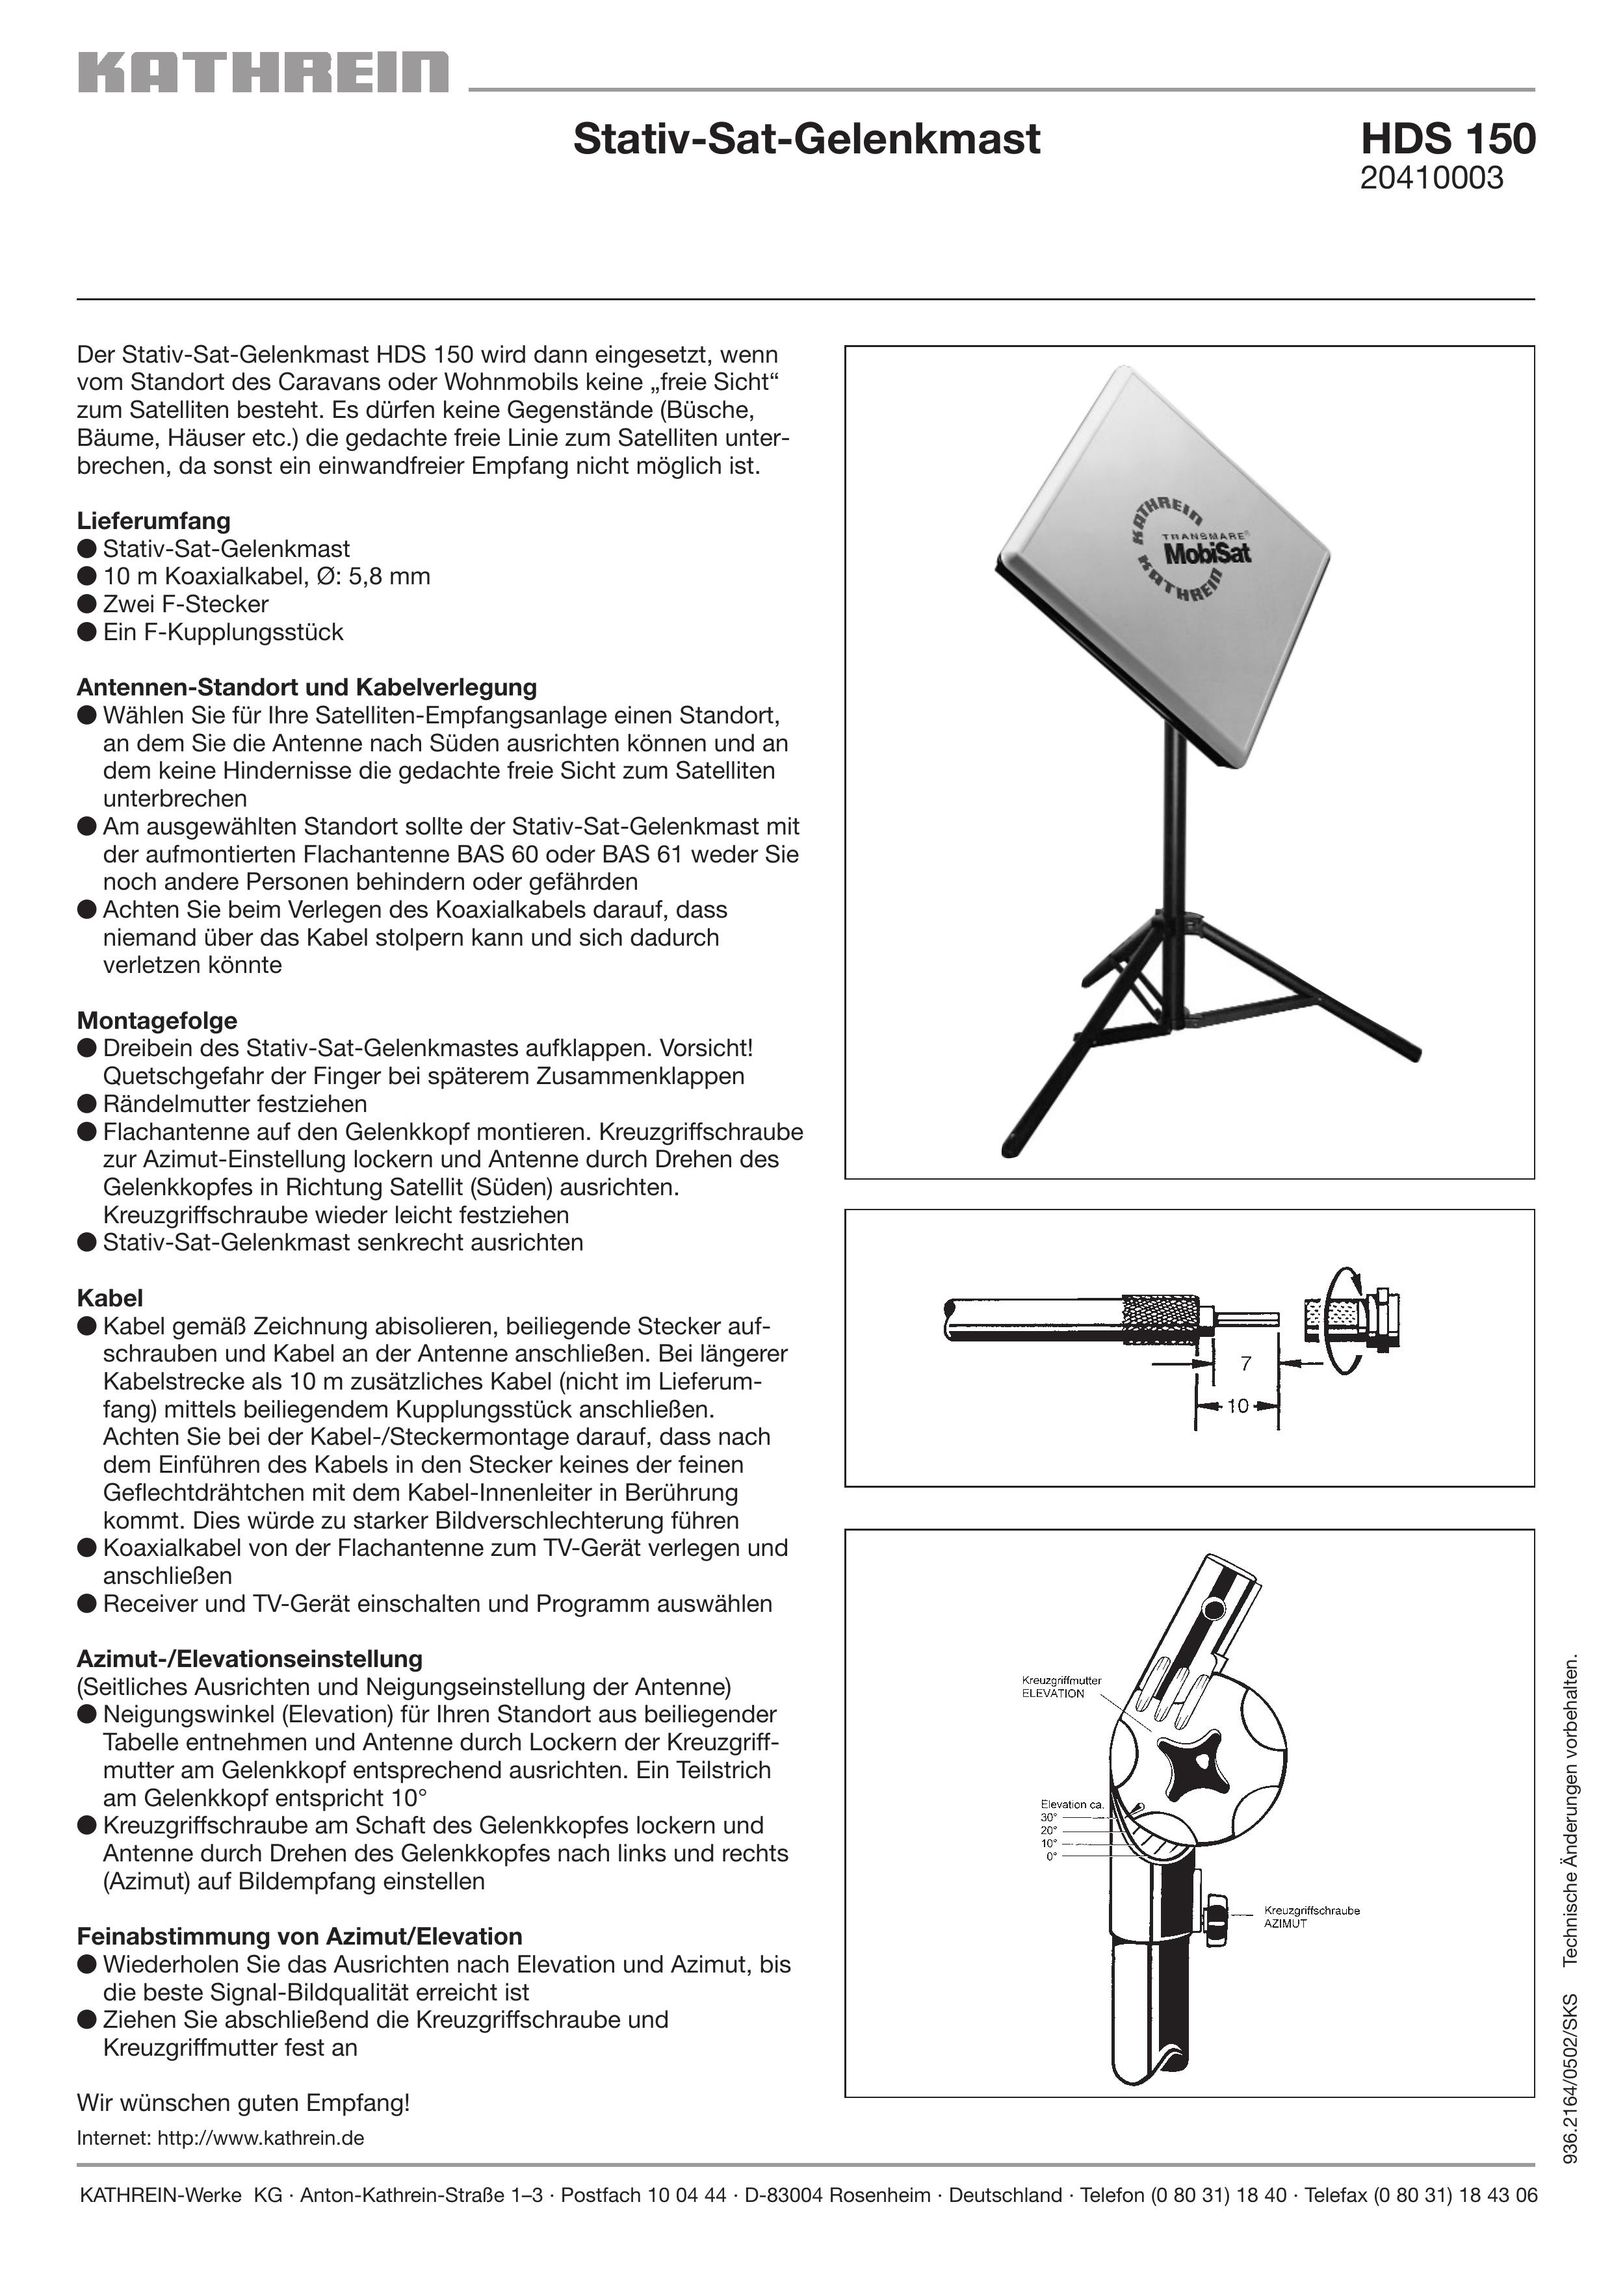 Kathrein HDS 150 Air Compressor User Manual